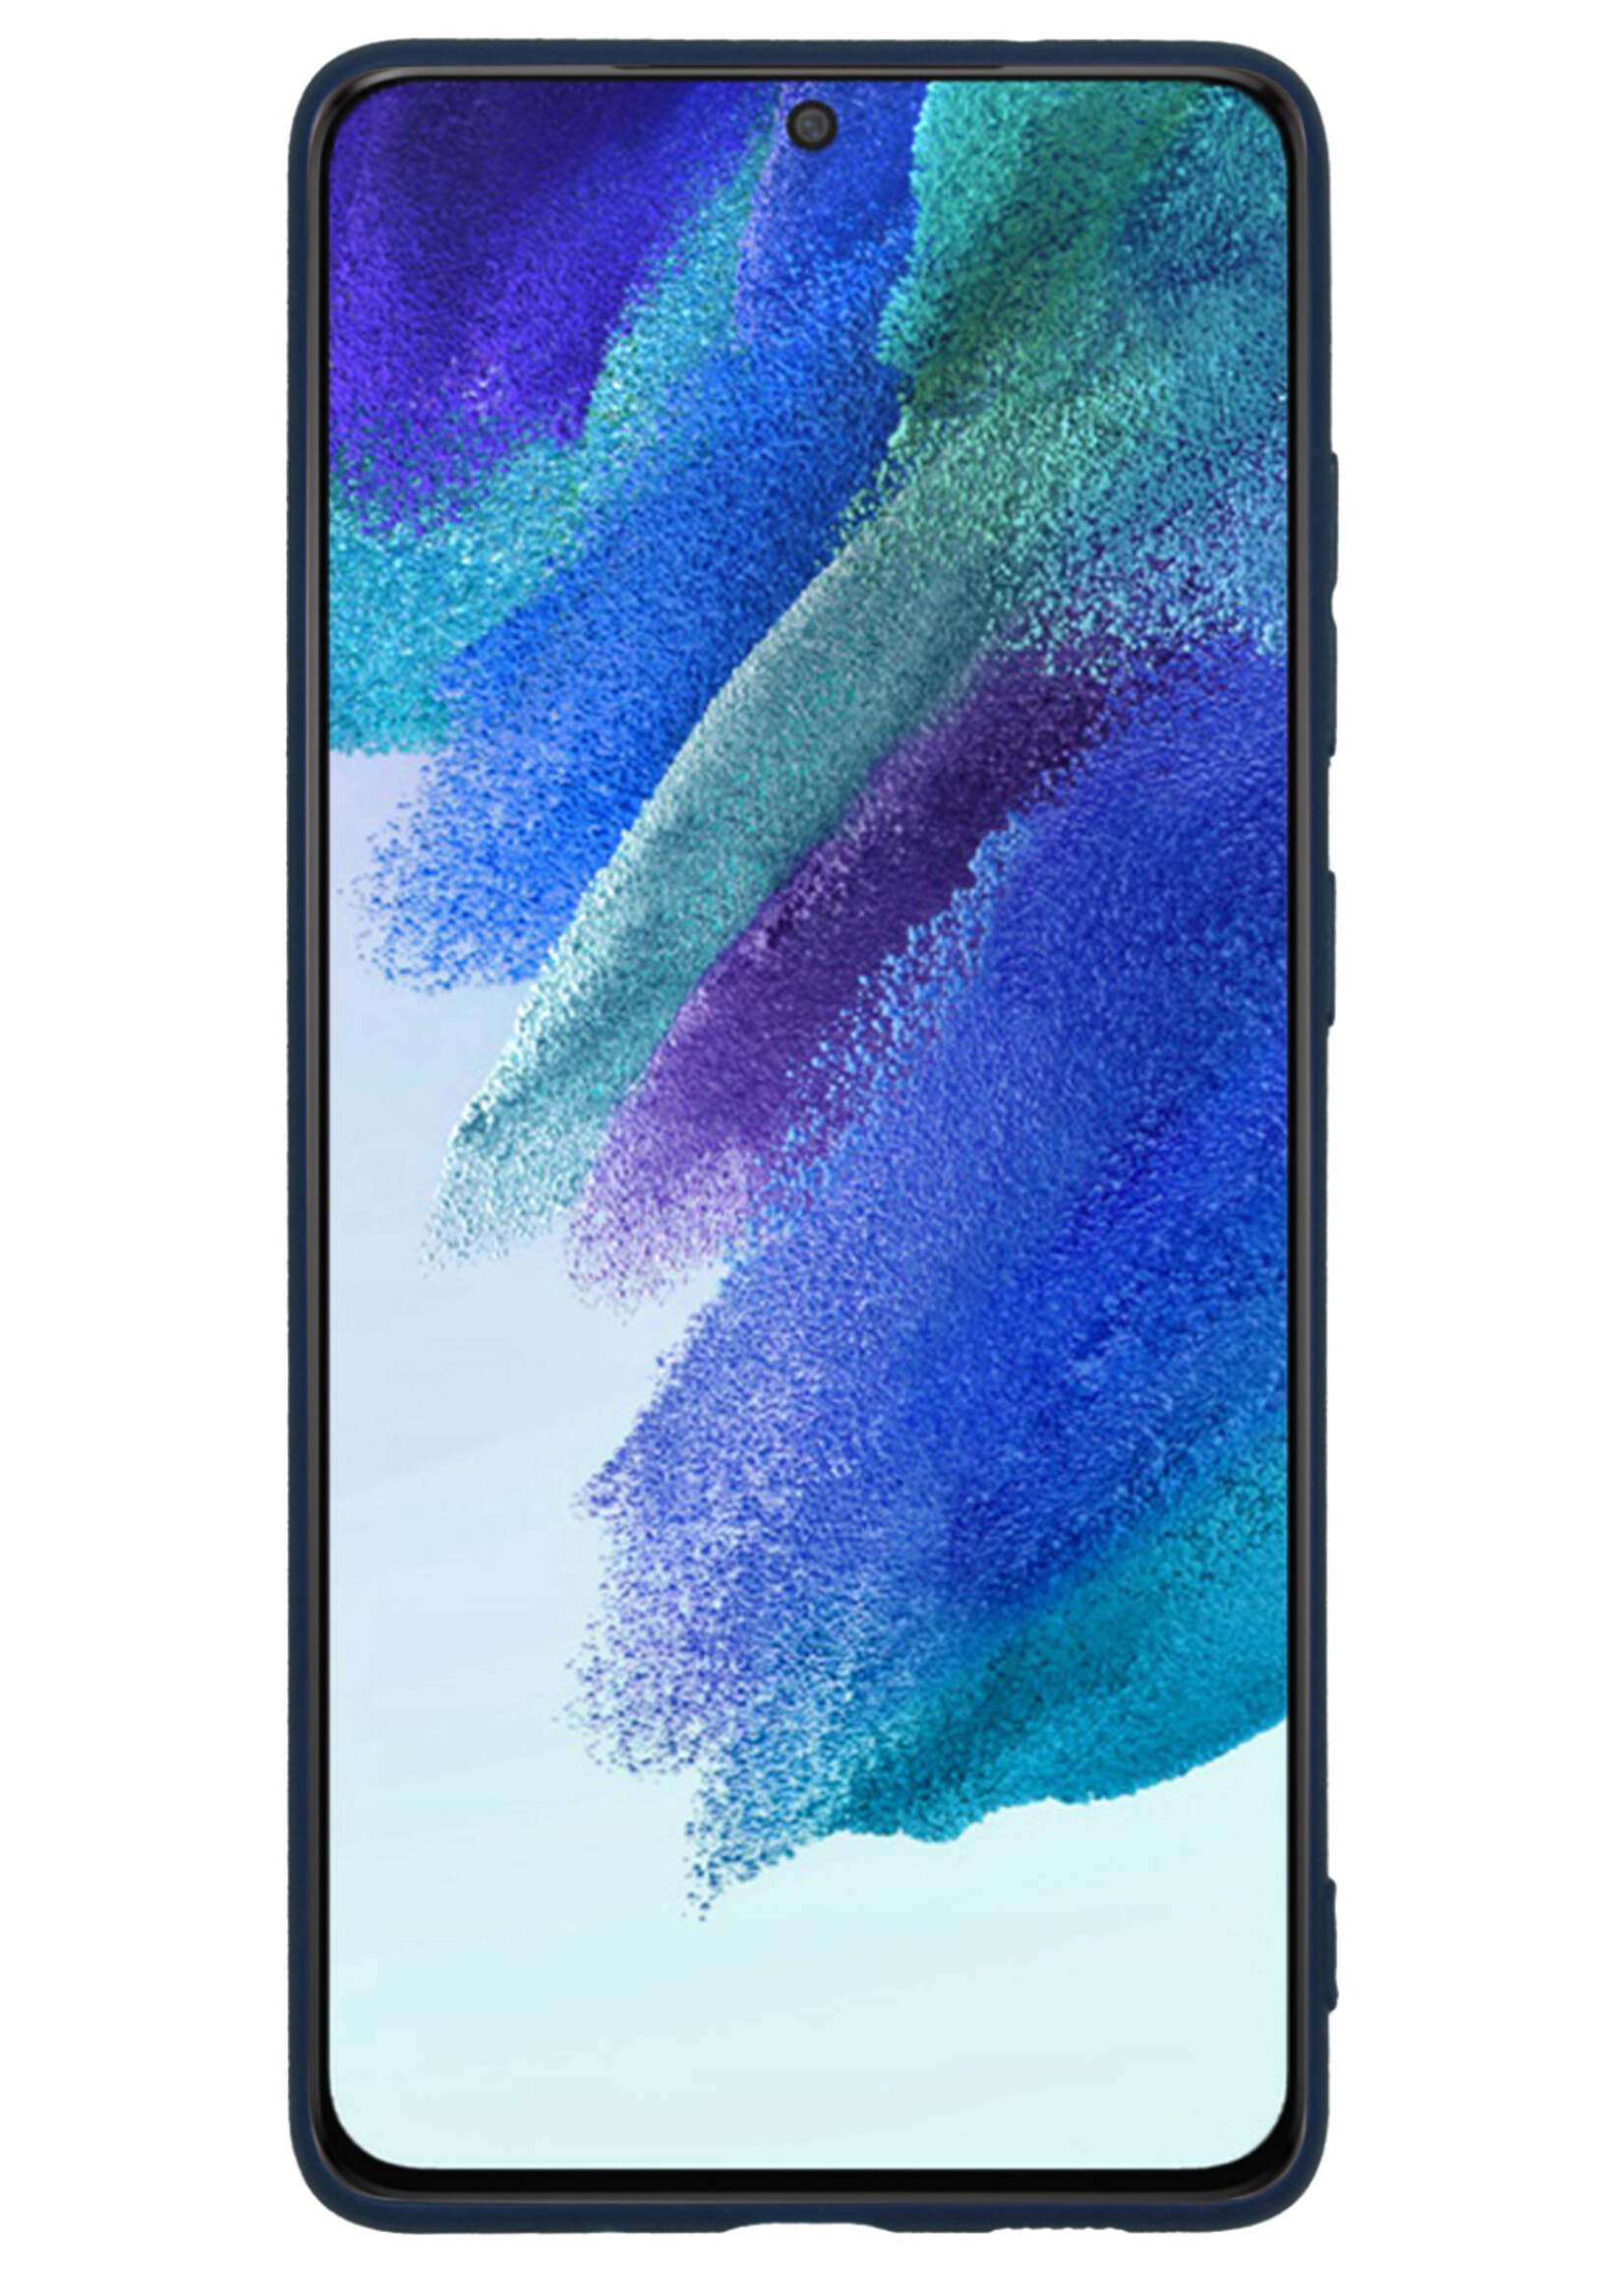 BTH Samsung Galaxy S21 FE Hoesje Siliconen Case Cover - Samsung S21 FE Hoesje Cover Hoes Siliconen - Donker Blauw